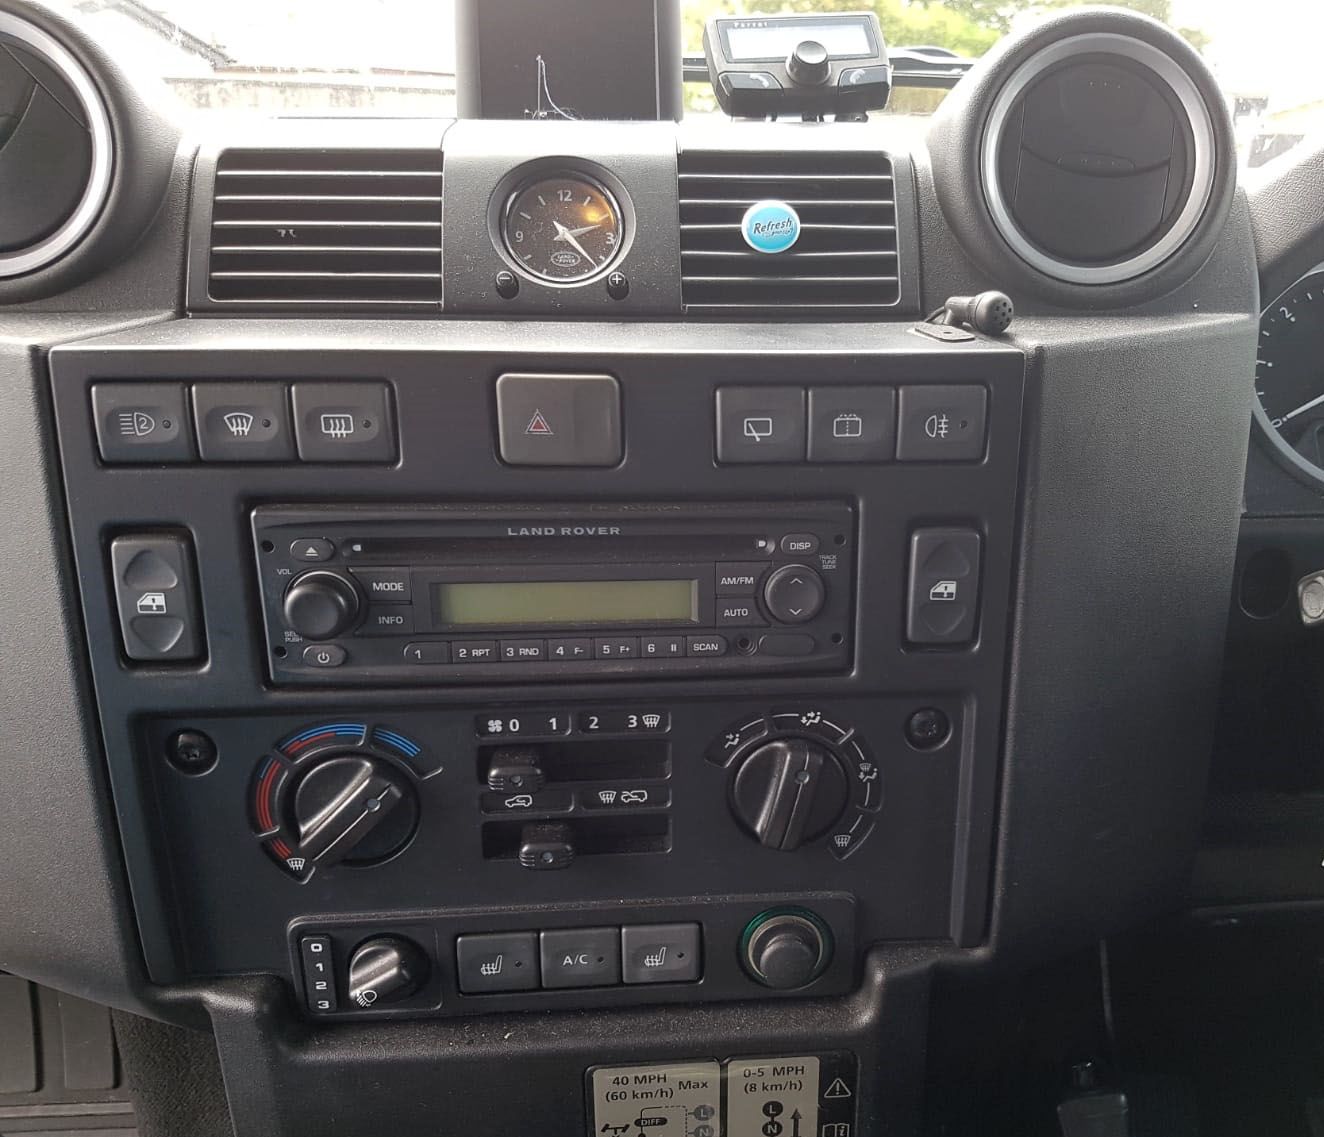 Land Rover Defender - Standard Radio before upgrade